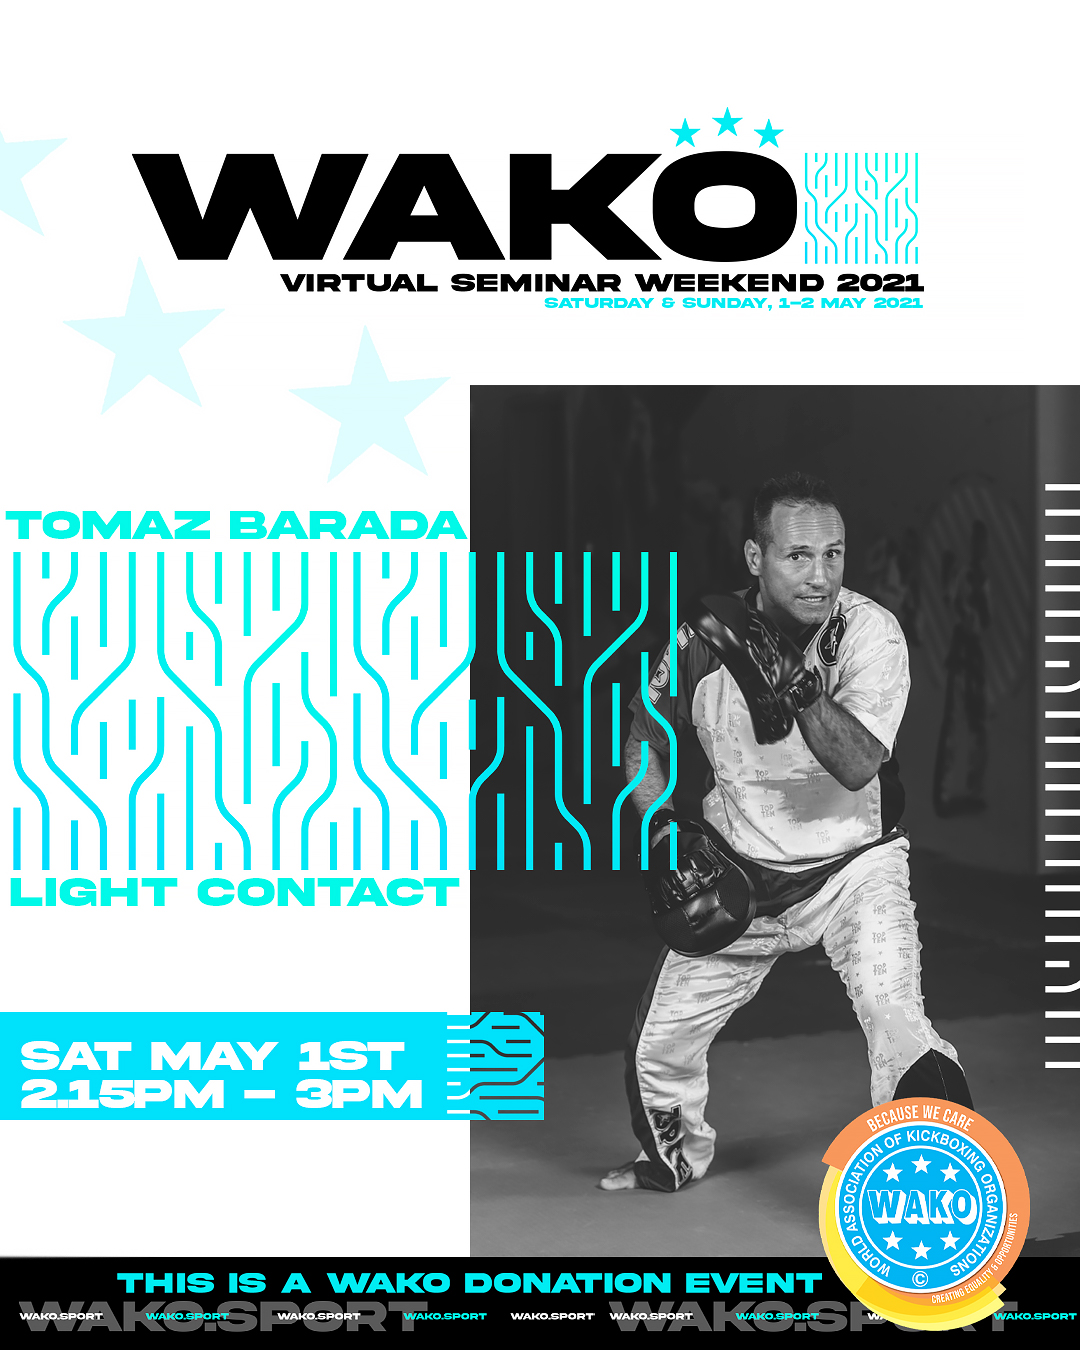 WAKO Virtual Seminar Weekend 2021 - 1 May 2:15-3:15 pm GMT - LIGHT CONTACT Tomaz Barada (Slovenia)